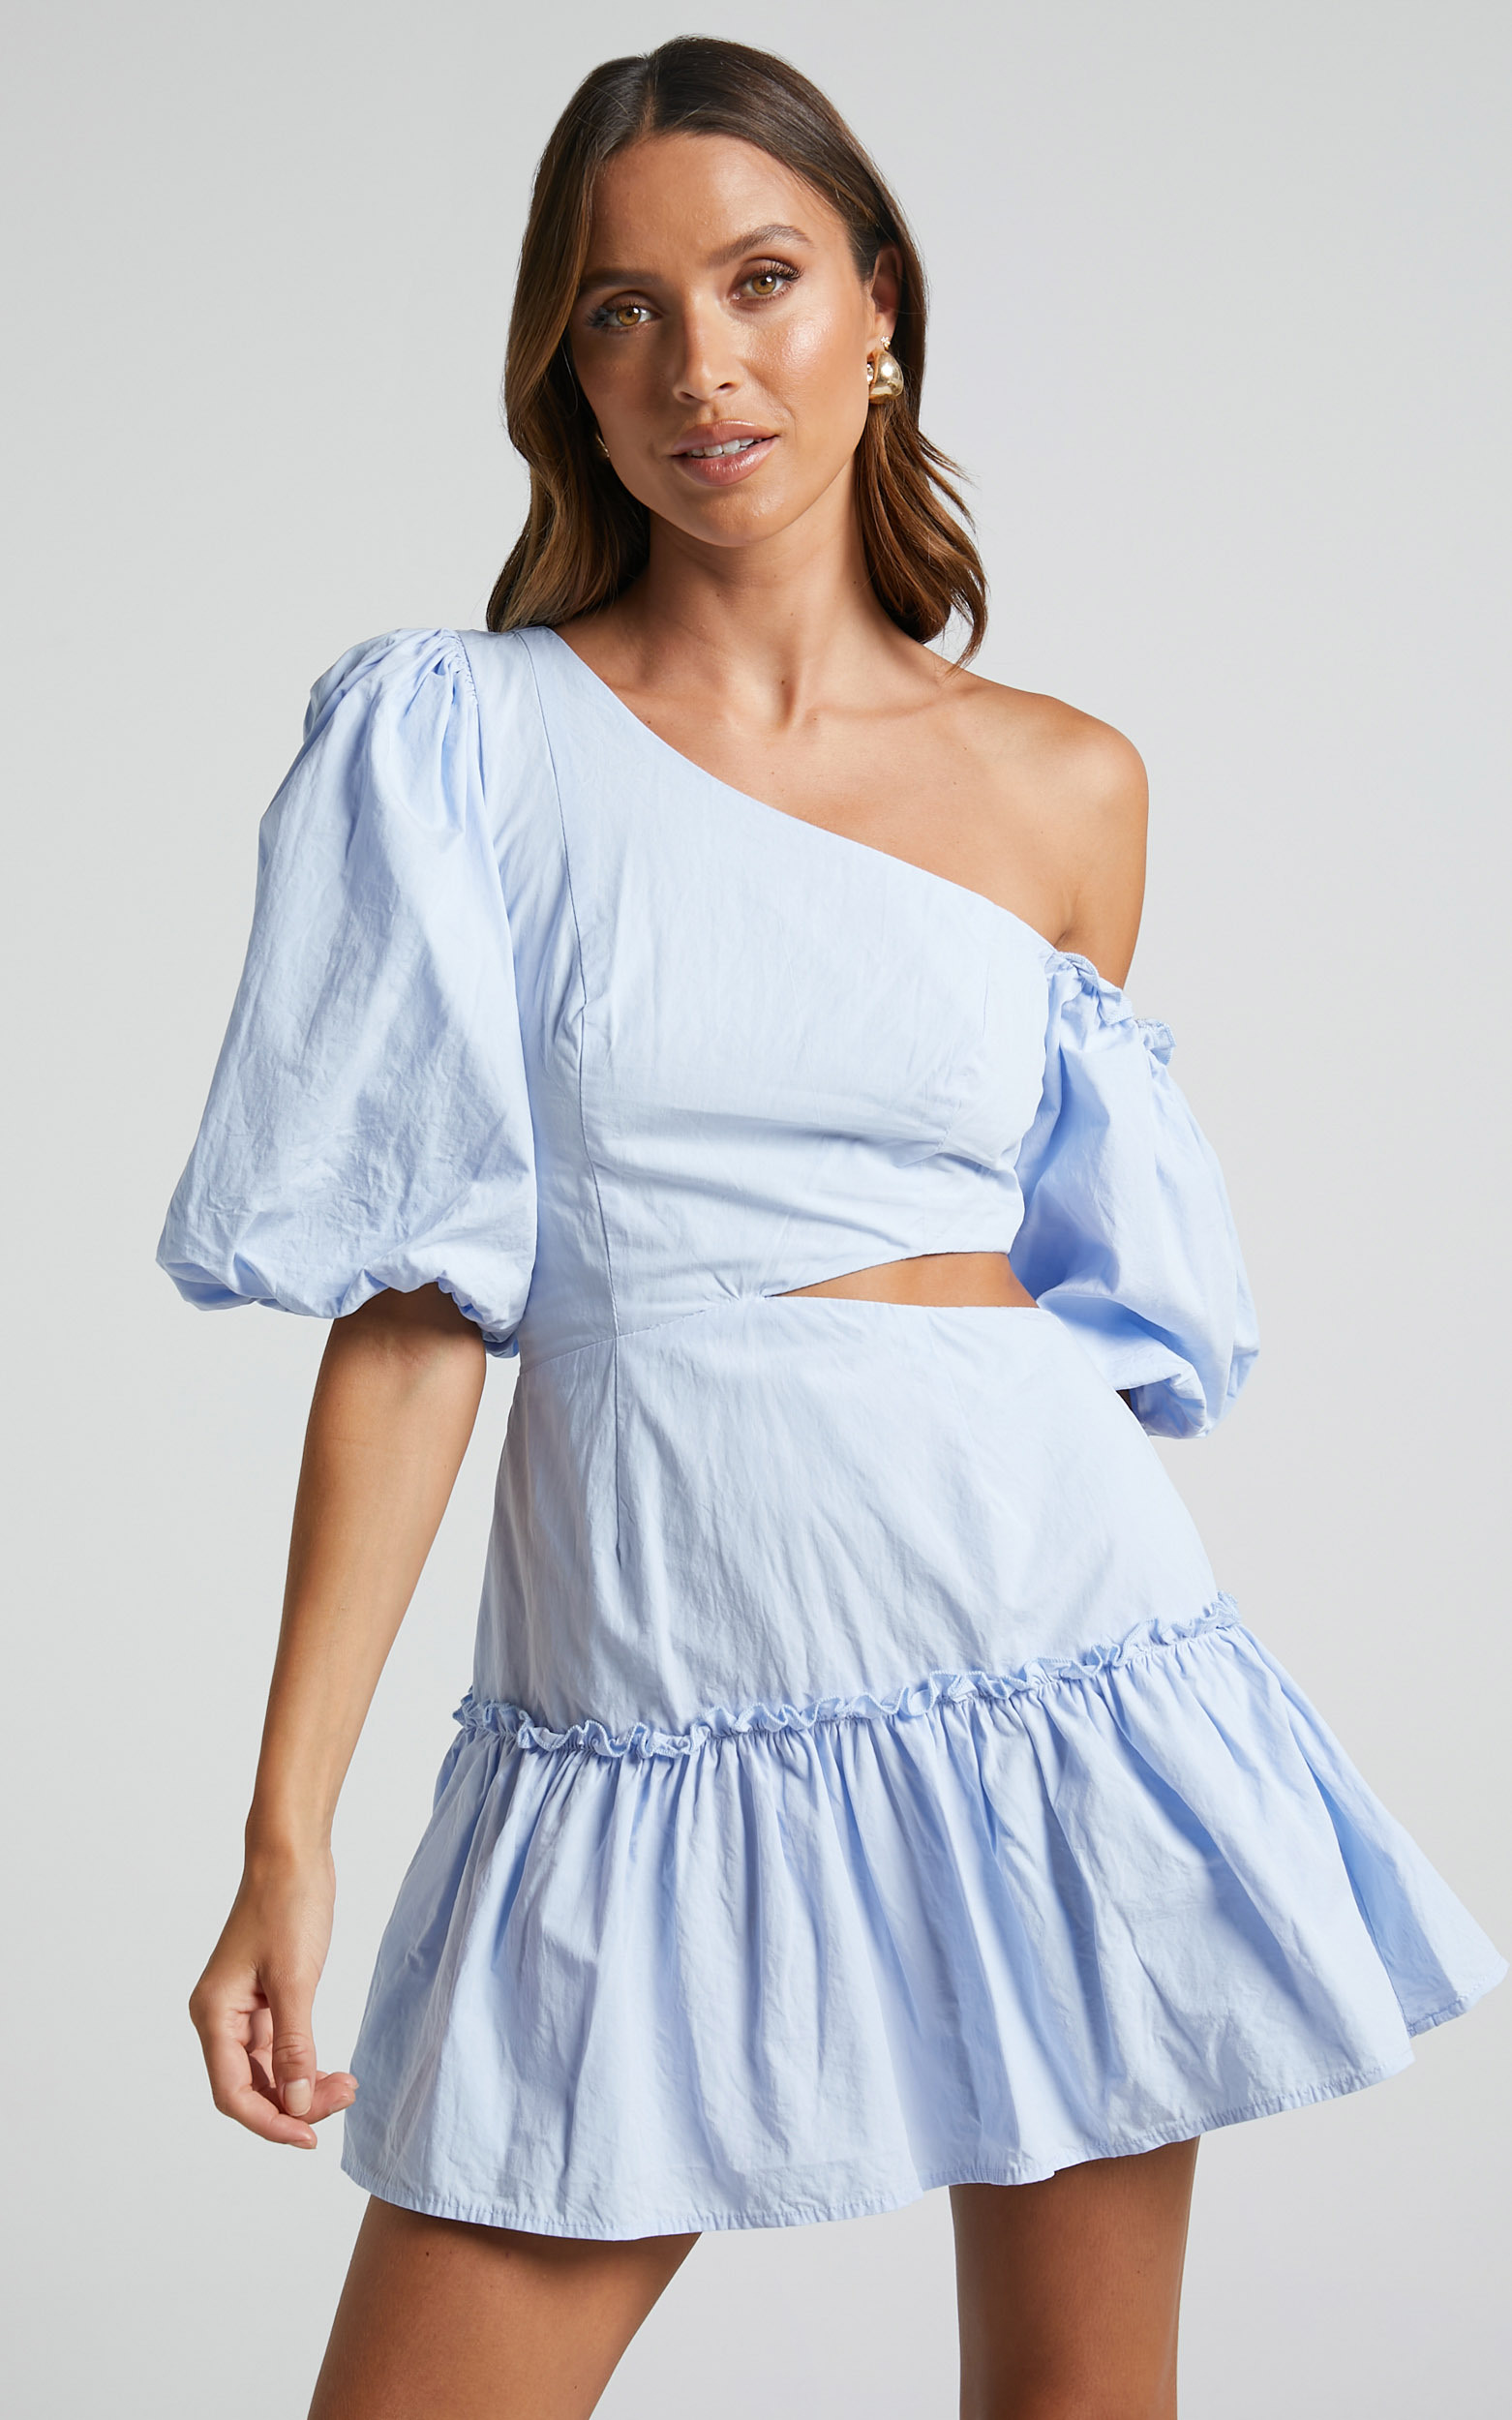 Ashtina Mini Dress - Off One Shoulder Puff Sleeve Dress in Pale Blue - 04, BLU1, hi-res image number null